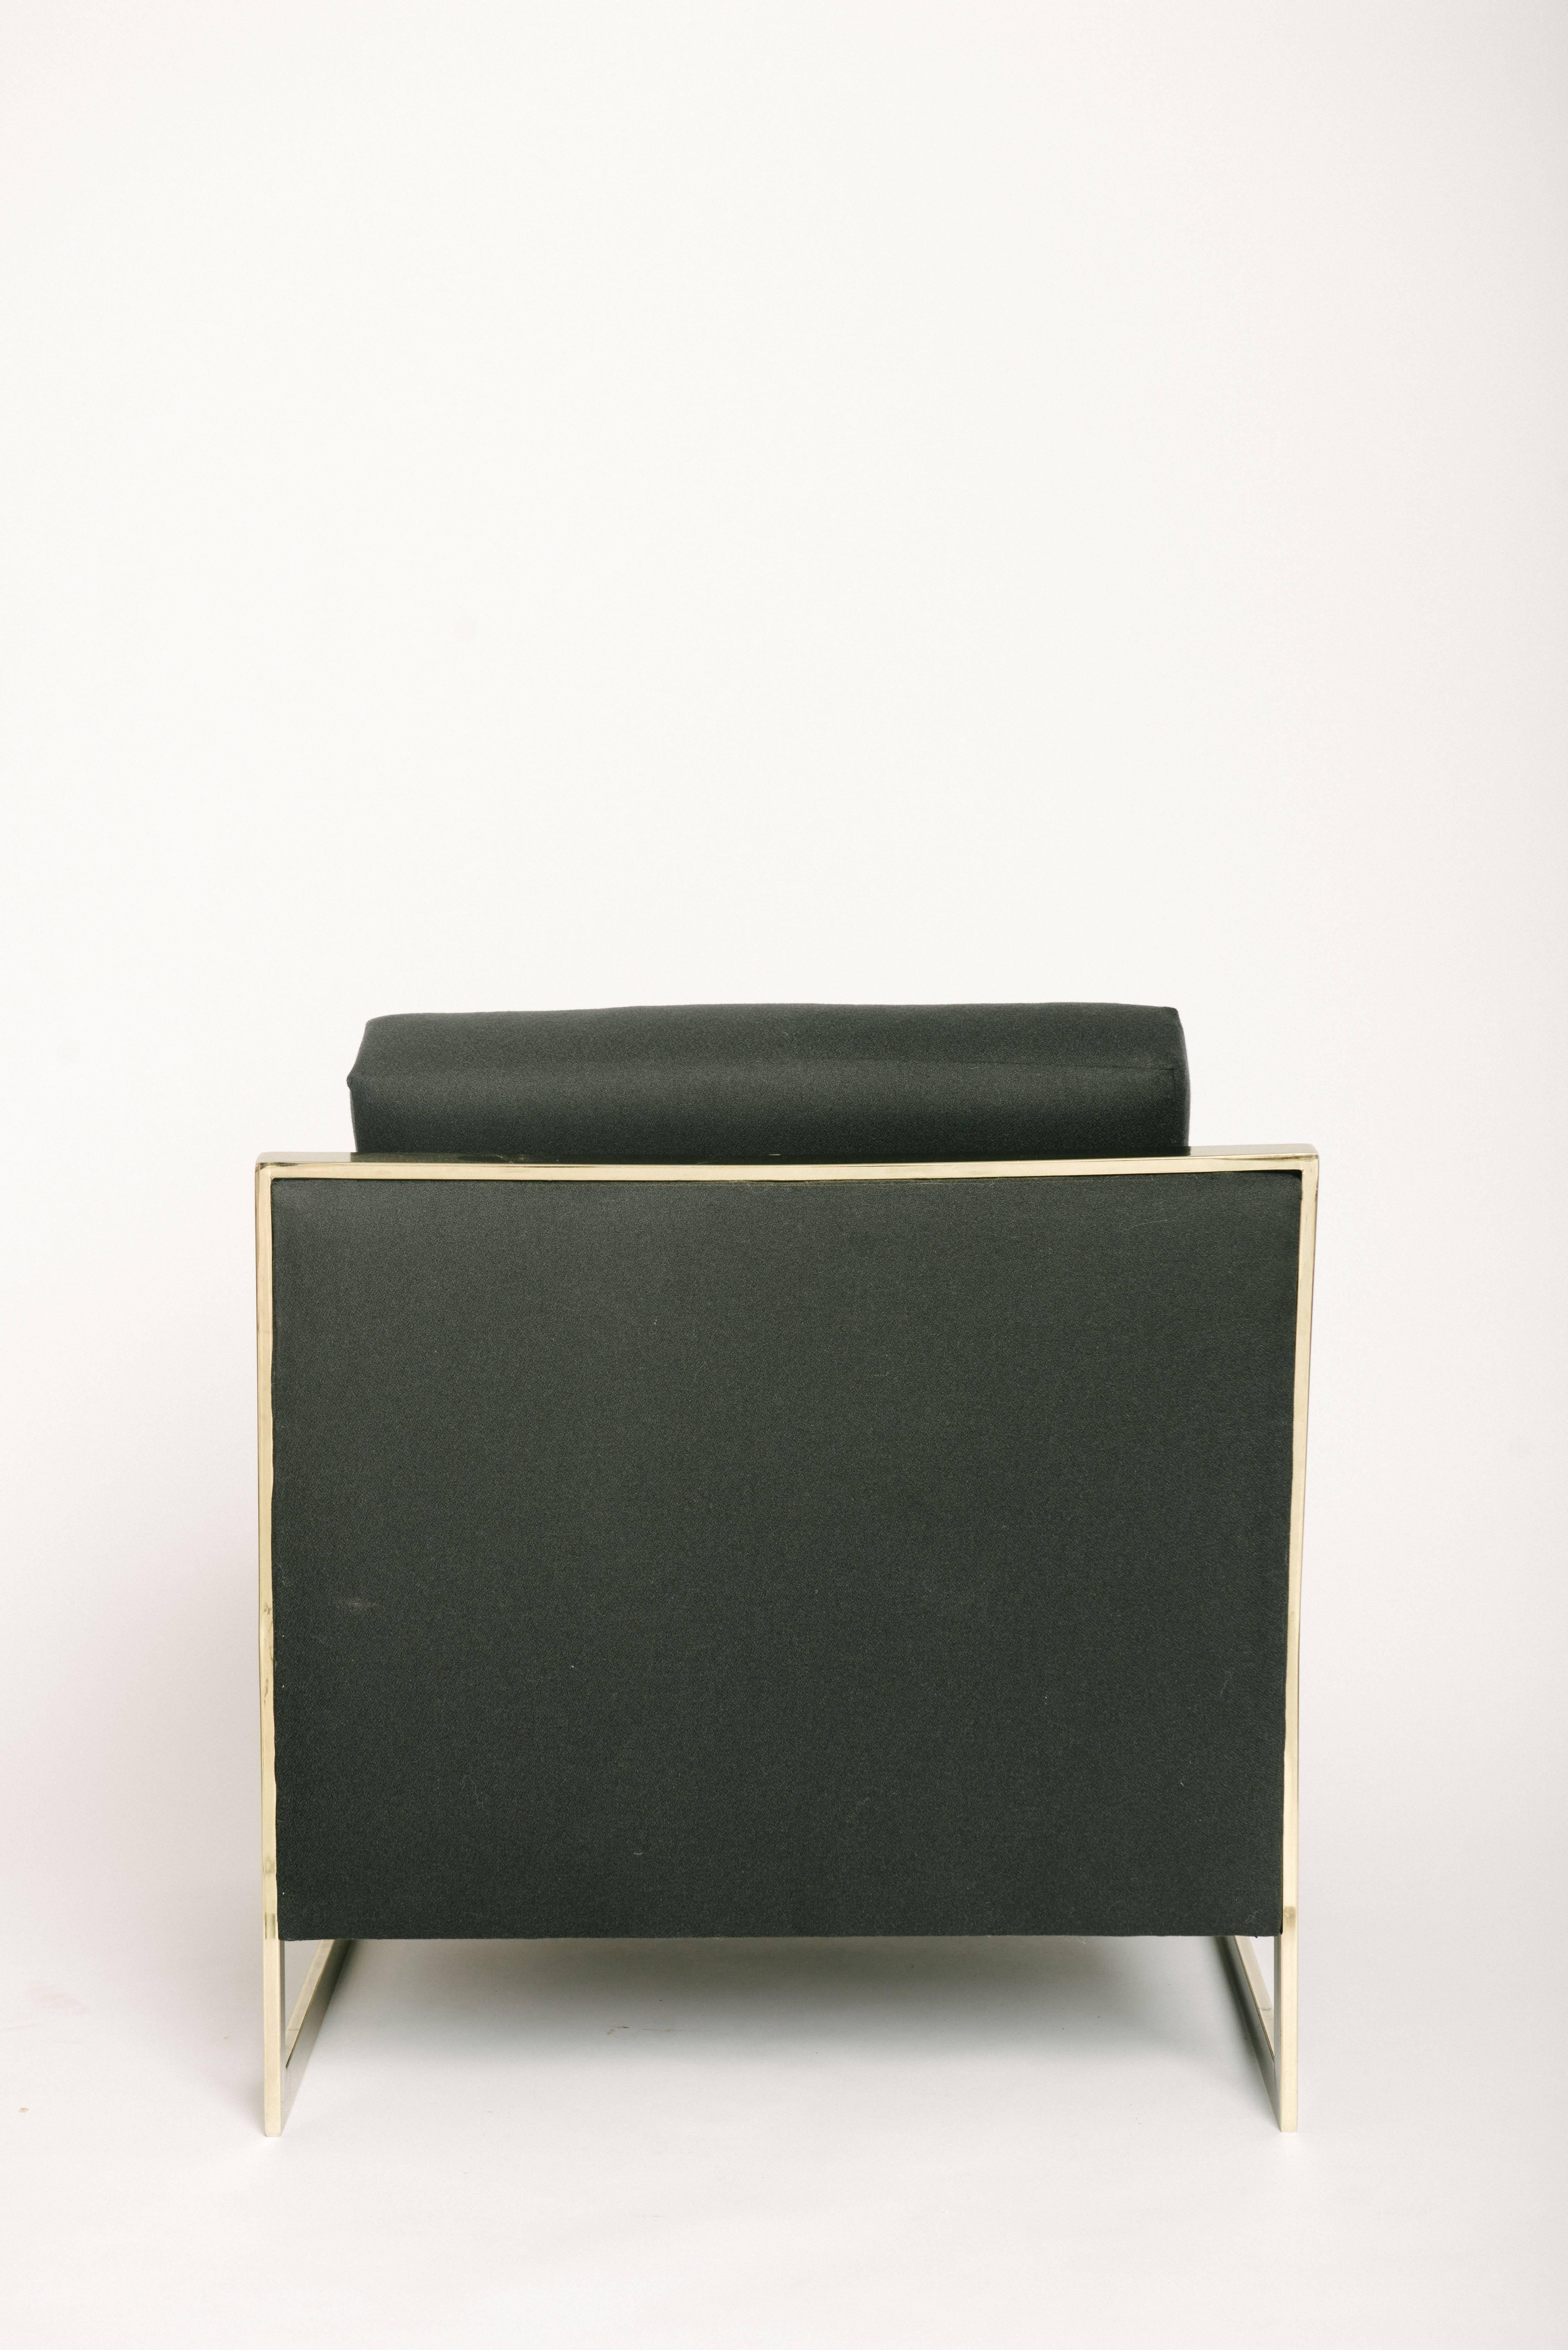 American  Milo Baughman Brass Cantilevered Lounge Chair